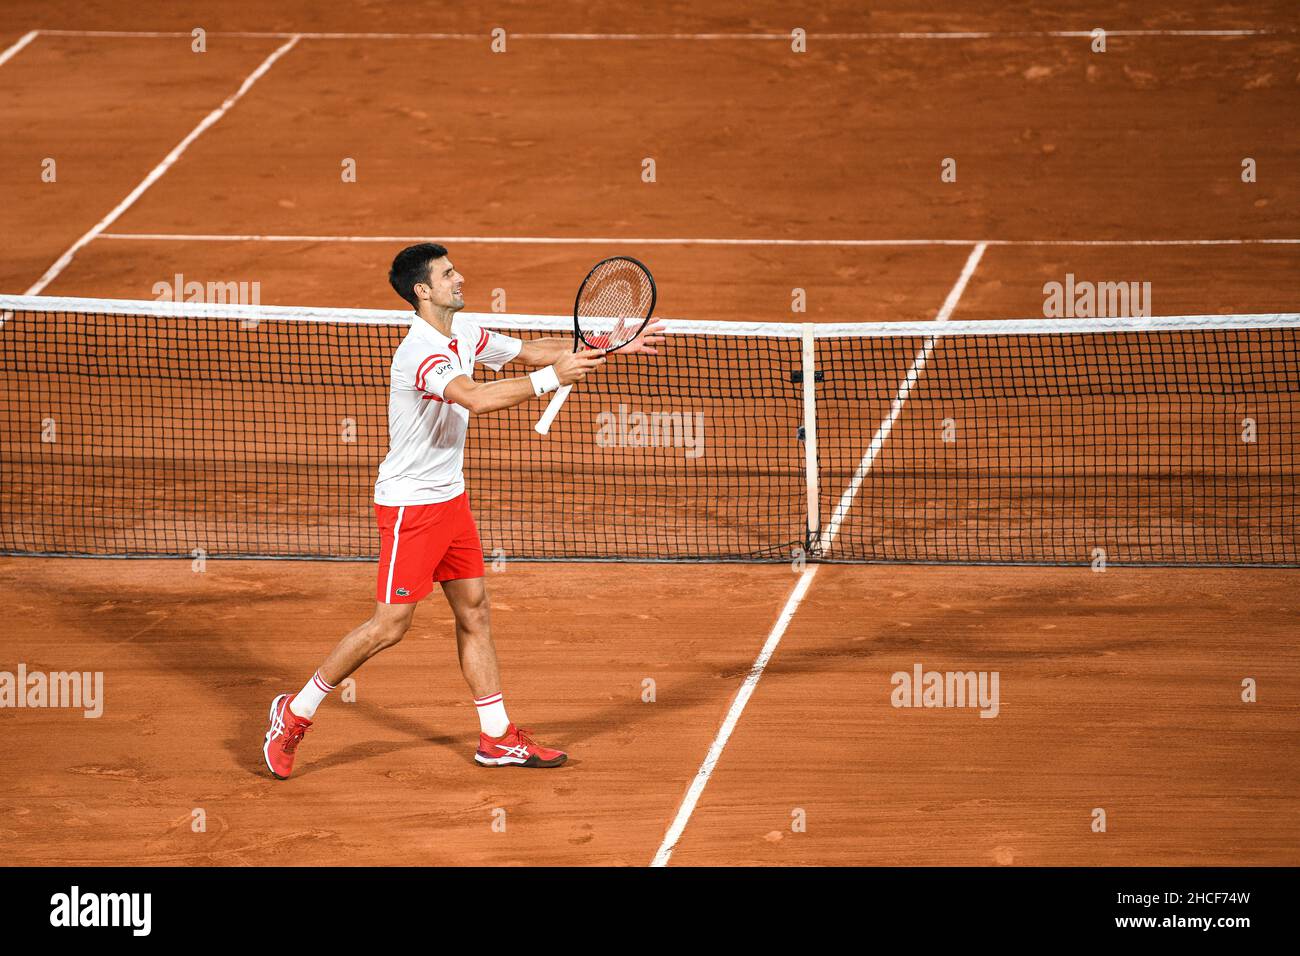 Novak Djokovic against Rafael Nadal during the semi-final of the Roland-Garros 2021, Grand Slam tennis tournament on June 11, 2021. Stock Photo